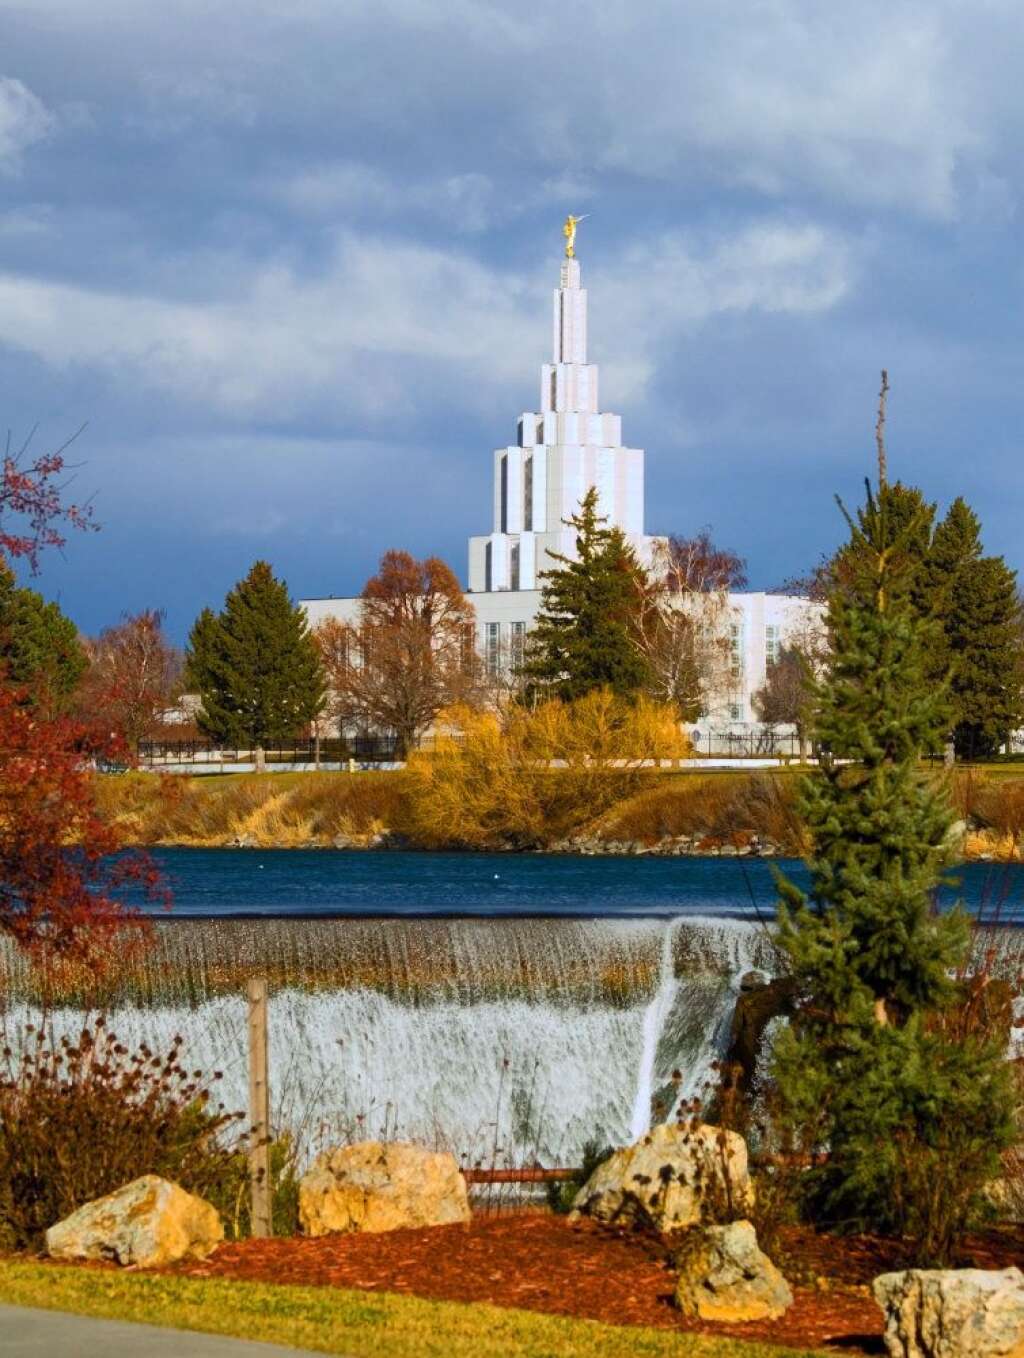 Idaho - 26,108 Mormons per 100,000 persons. <br>     Credit: Wikimedia Commons. Original photo <a href="http://upload.wikimedia.org/wikipedia/commons/b/bc/Idaho_Falls_Temple.jpg" target="_hplink">here</a>.